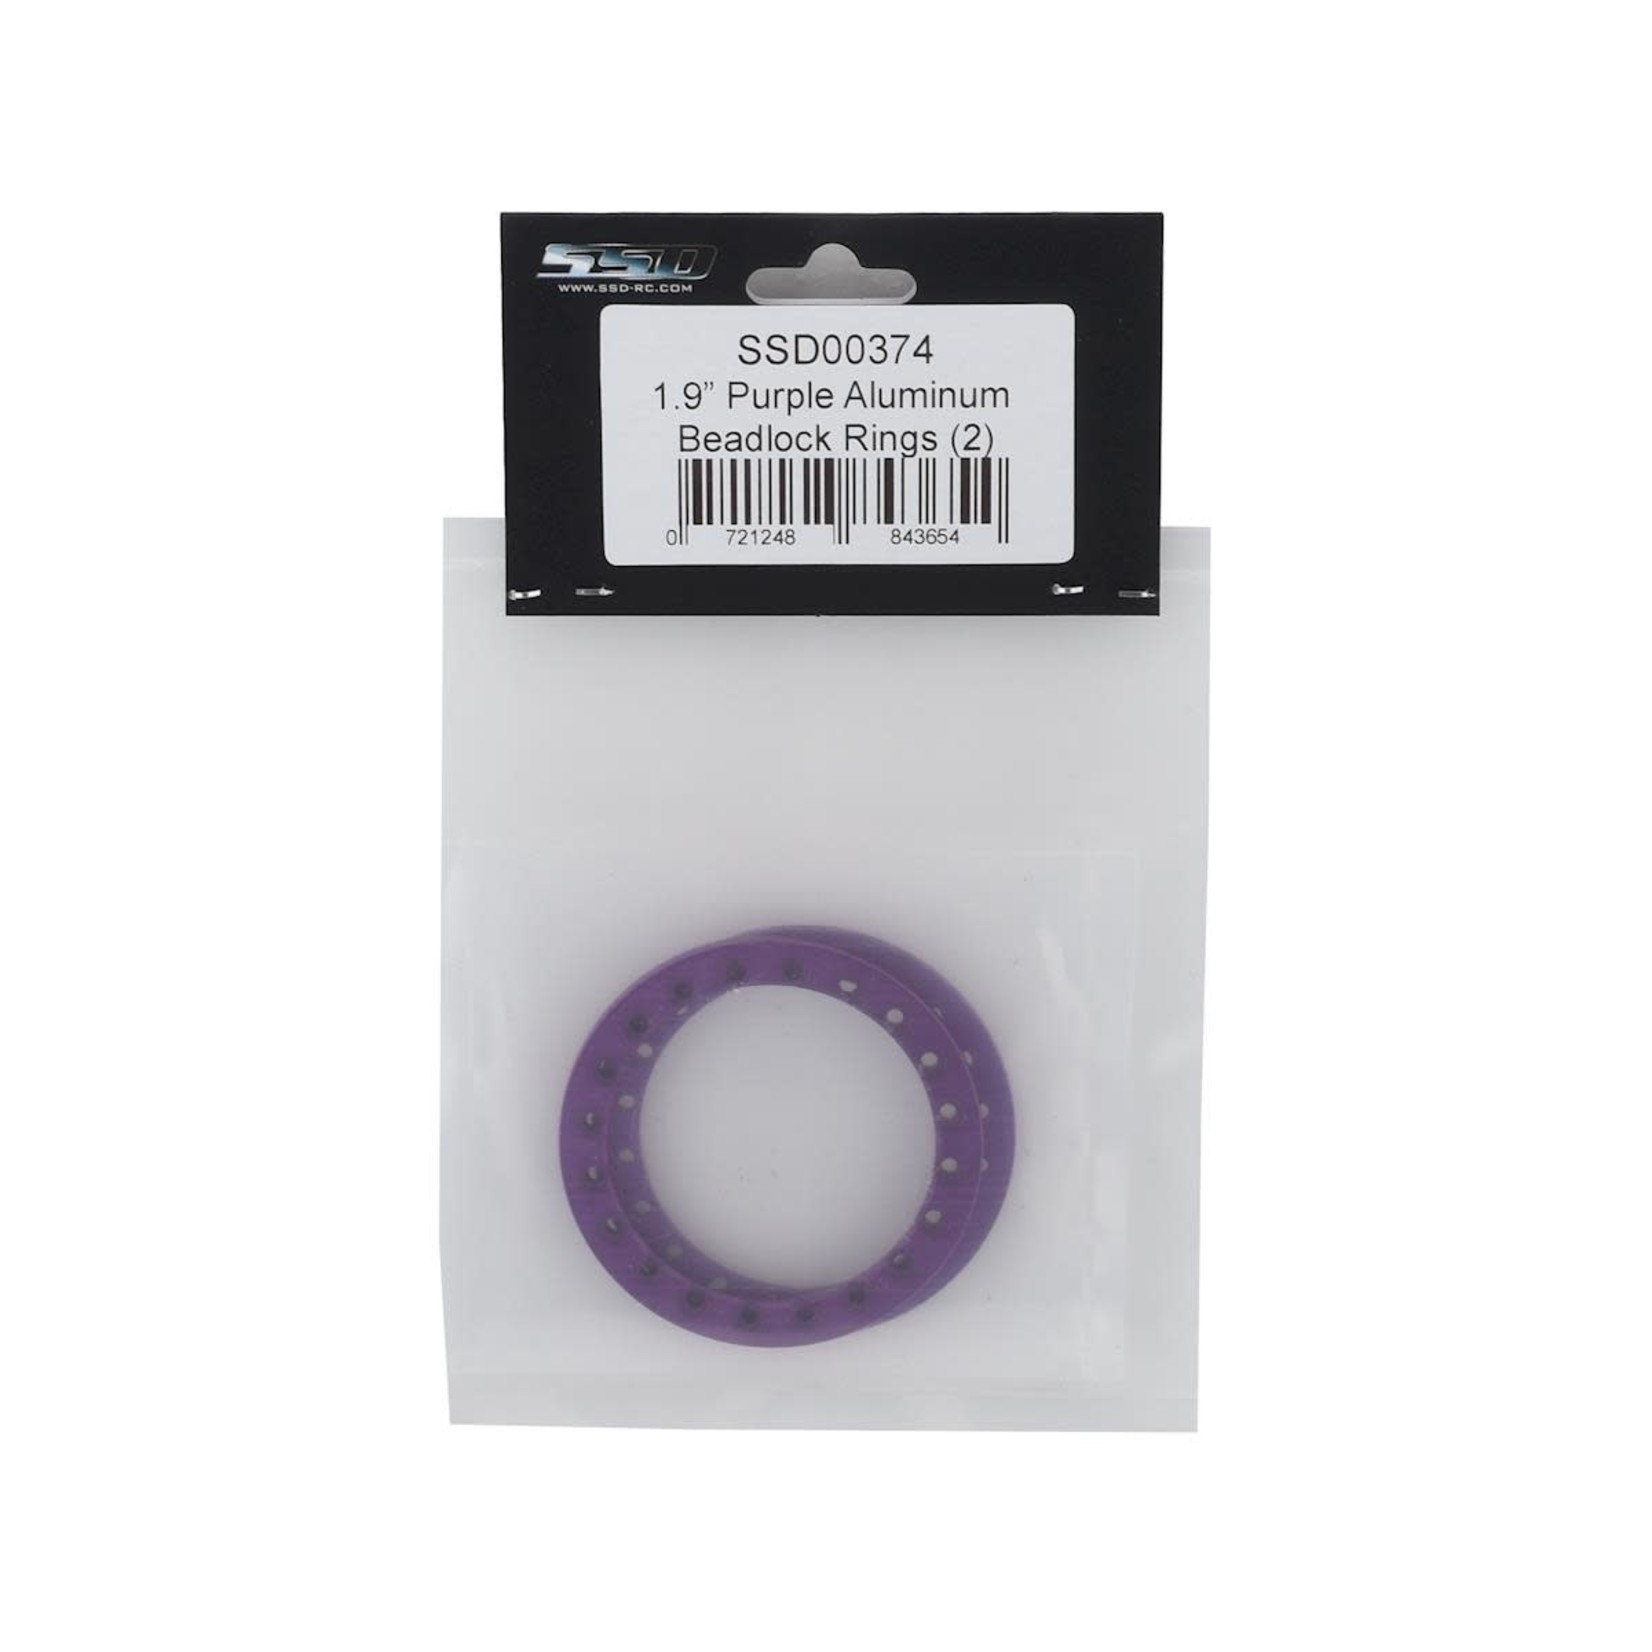 SSD RC SSD RC 1.9" Aluminum Beadlock Rings (Purple) (2) #SSD00374